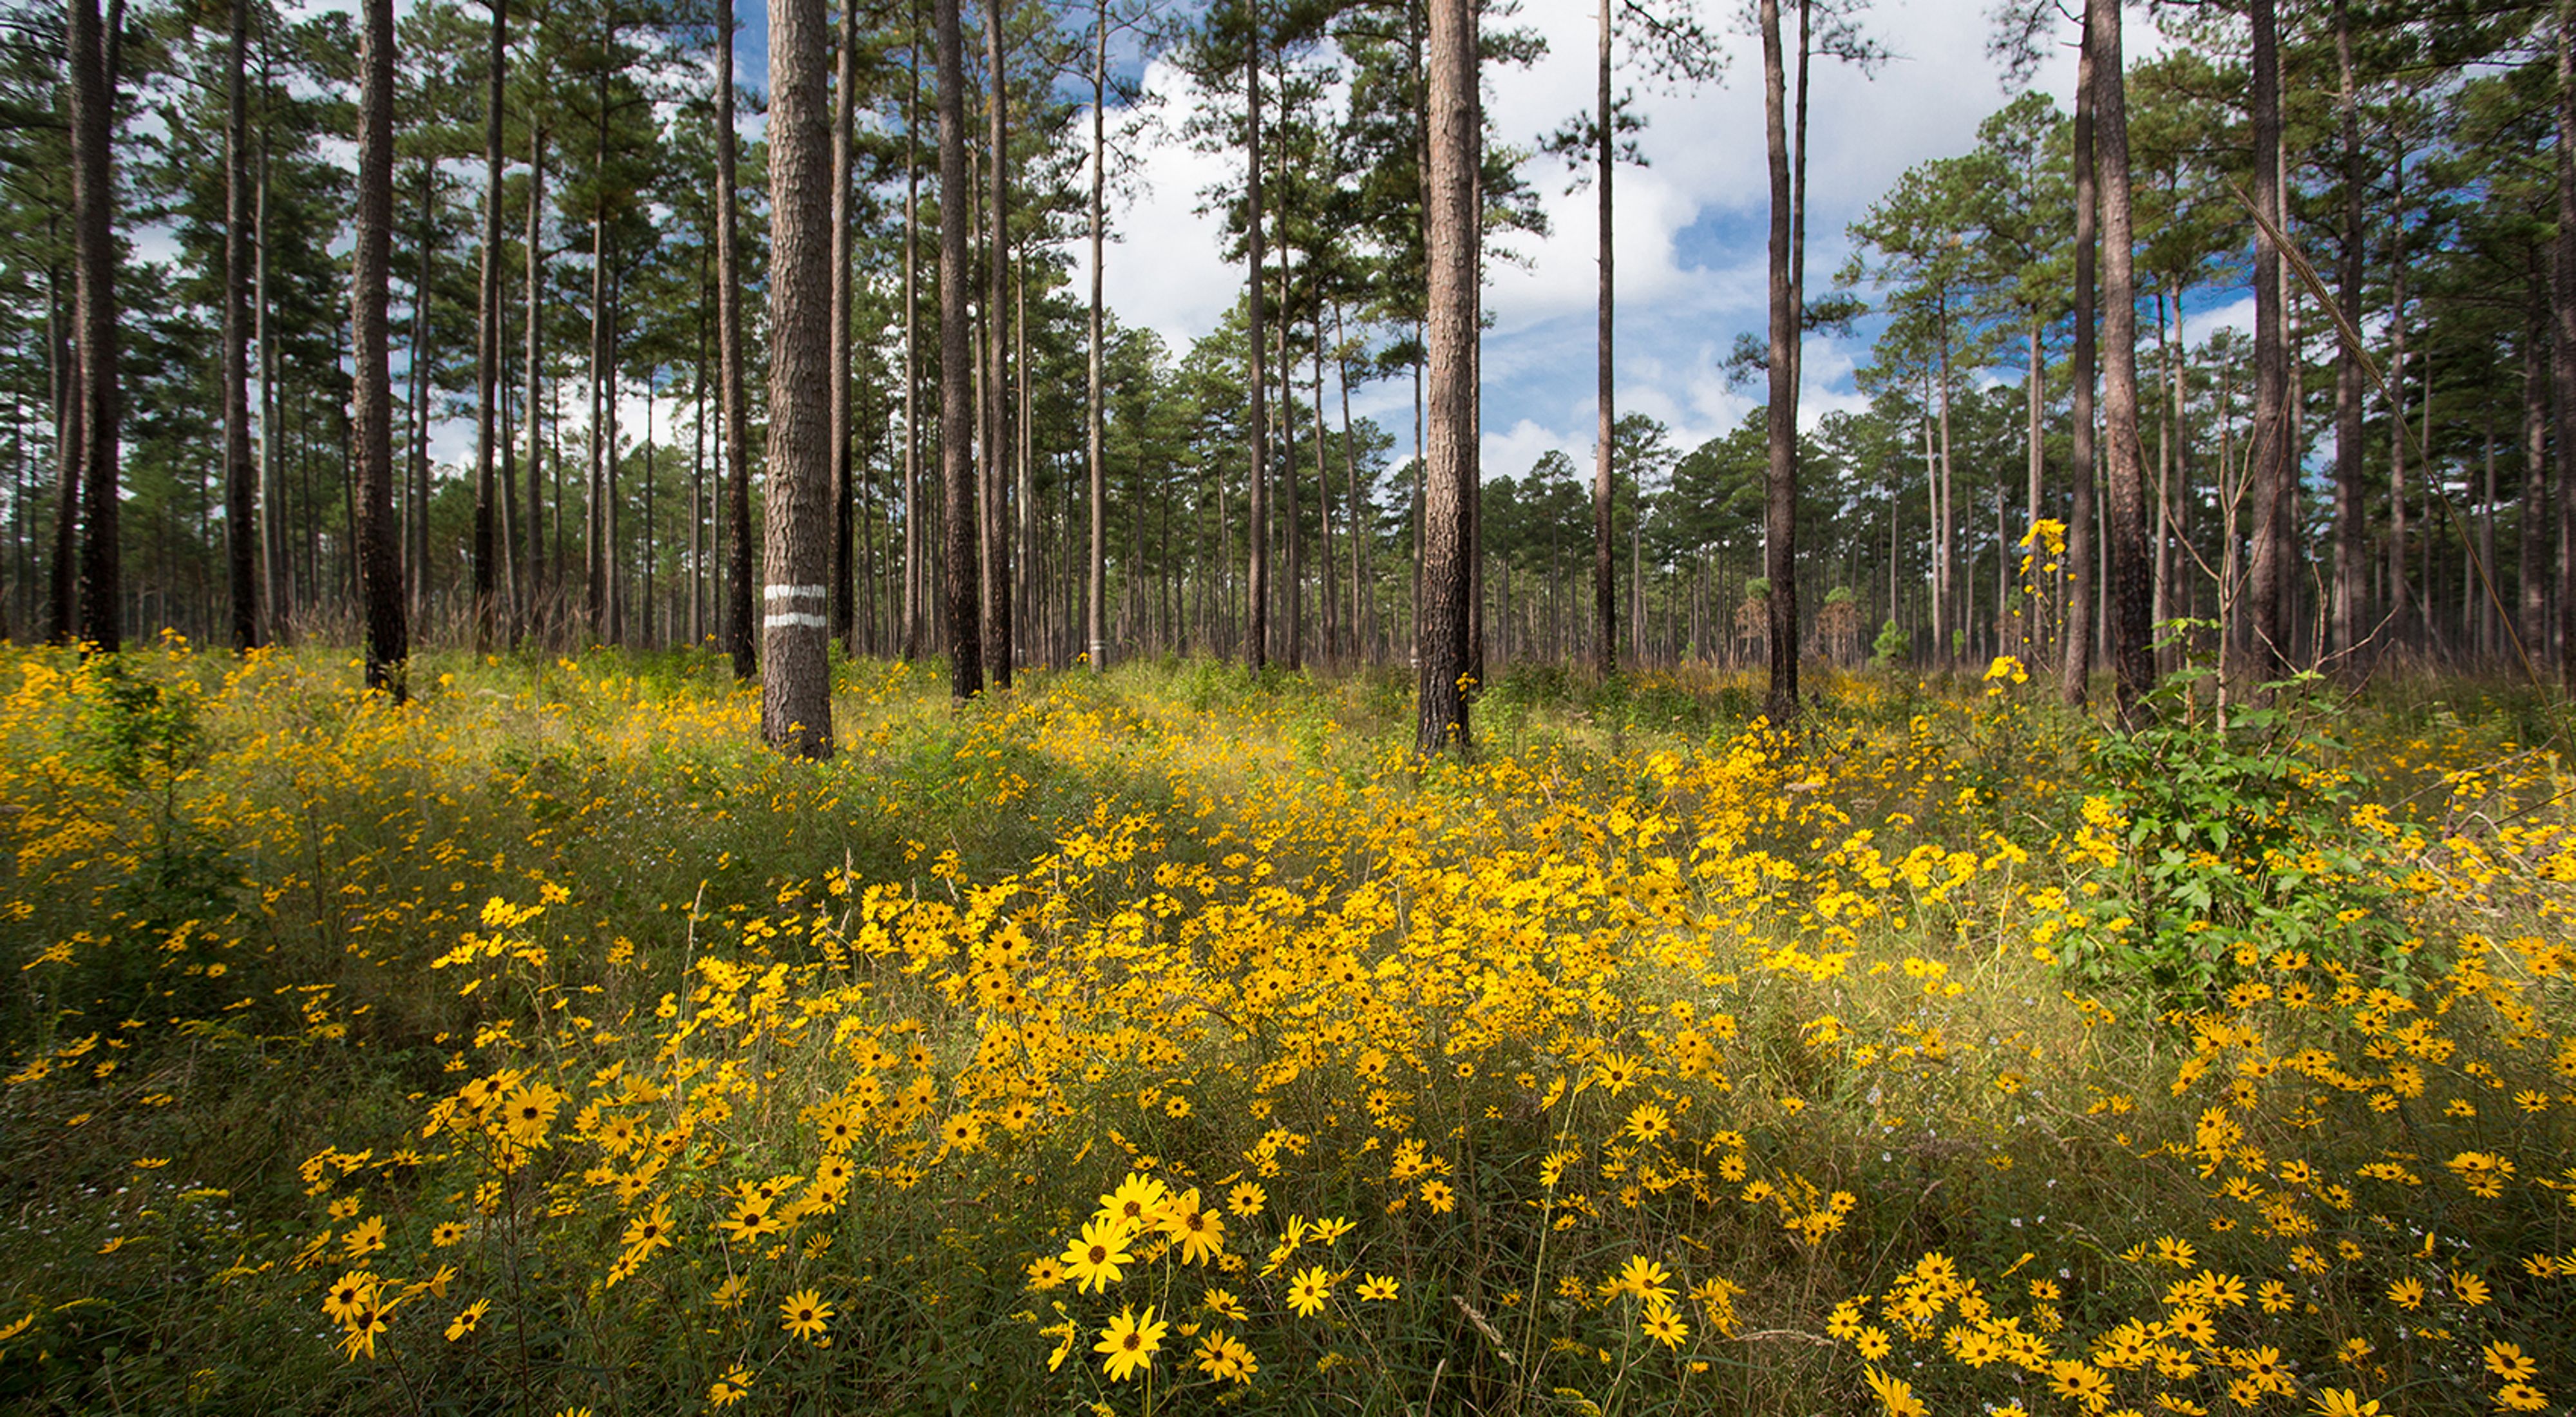 Yellow flowers grow in the open savanna beneath tall pine trees at Virginia's Piney Grove Preserve.